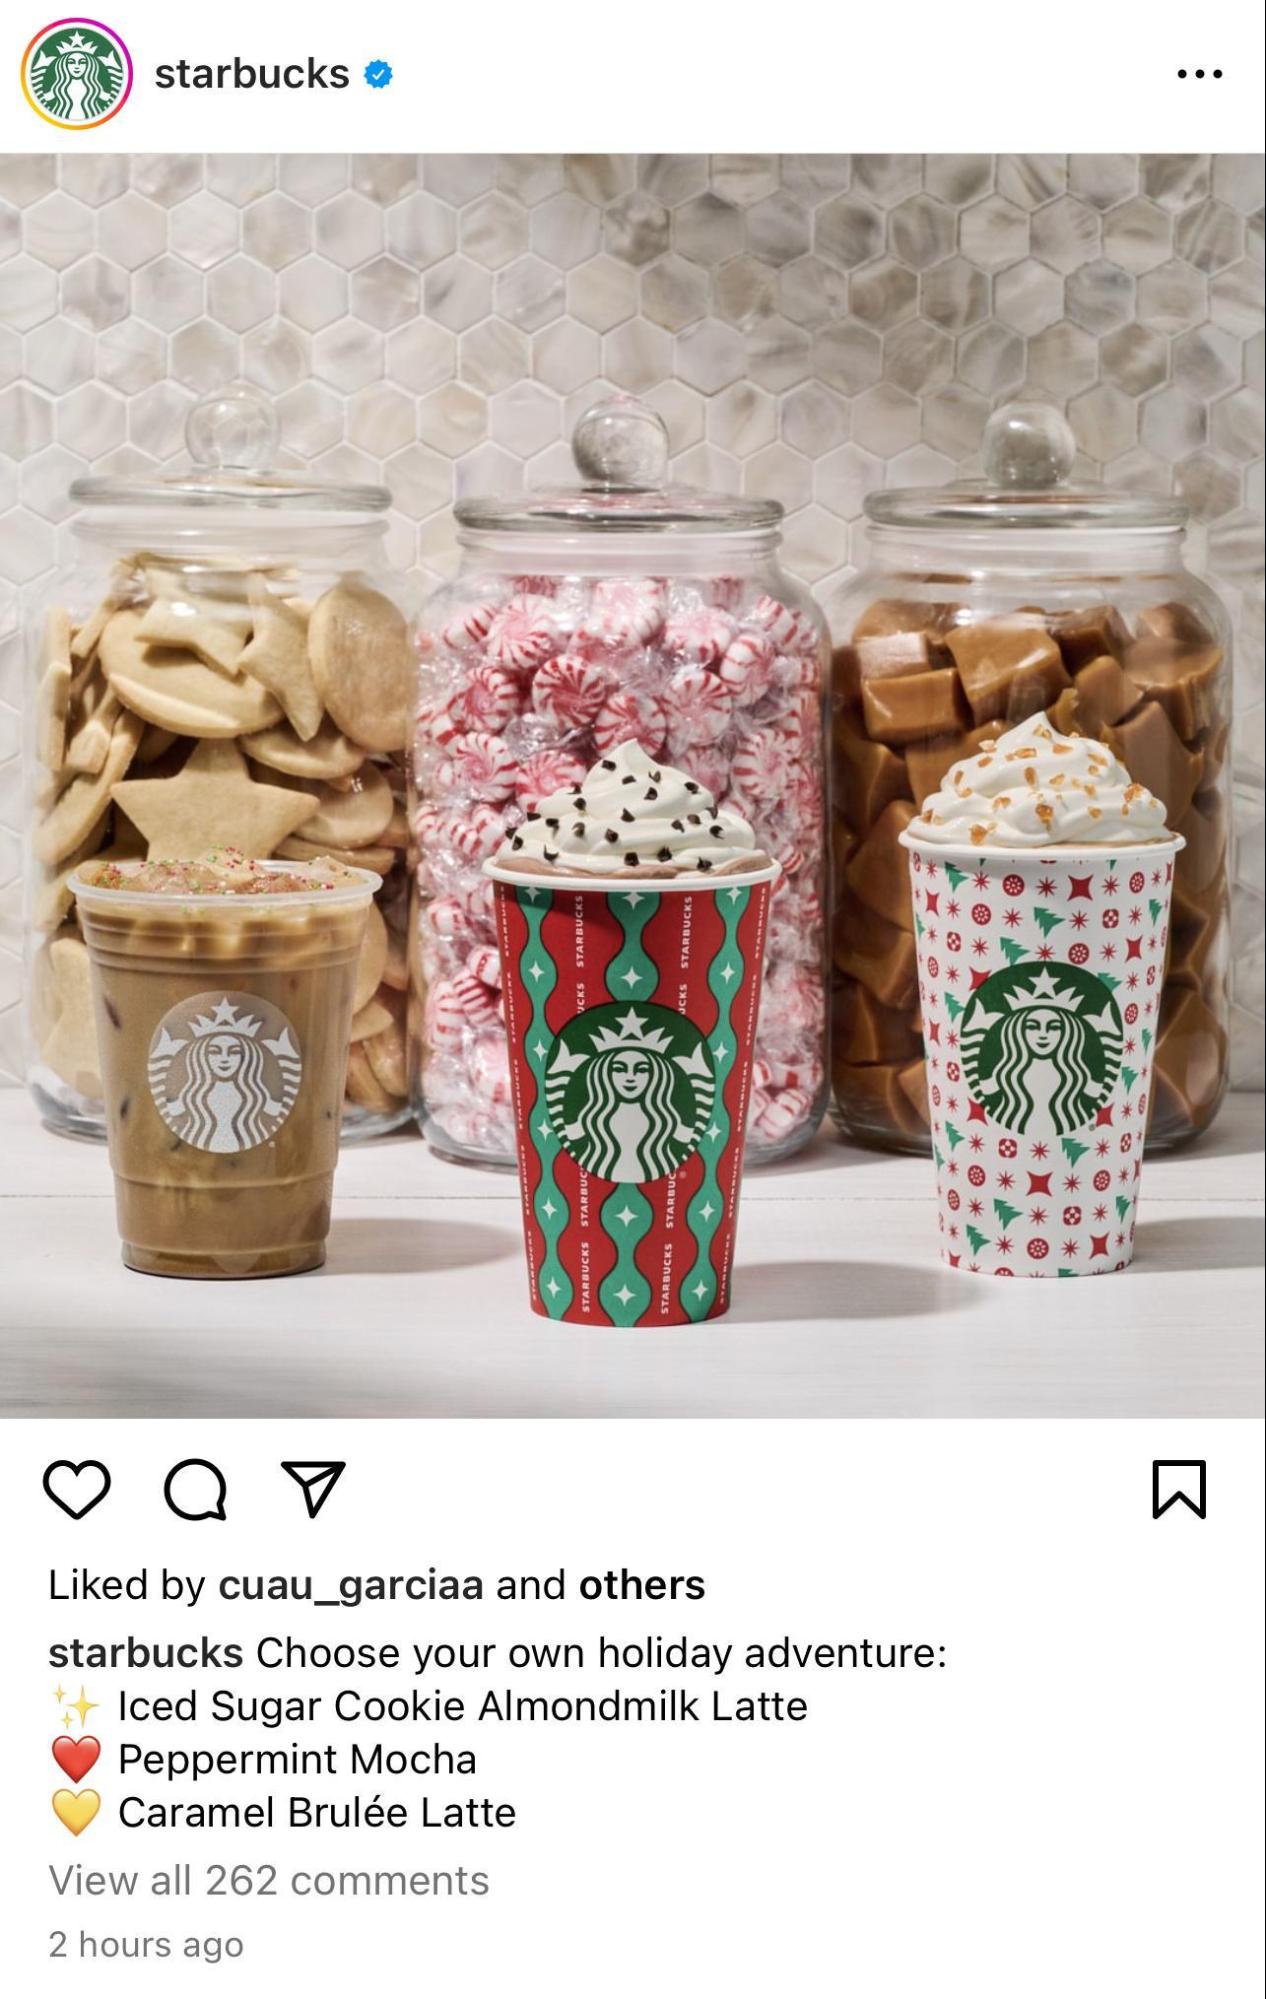 Starbucks’ Christmas social media campaign.